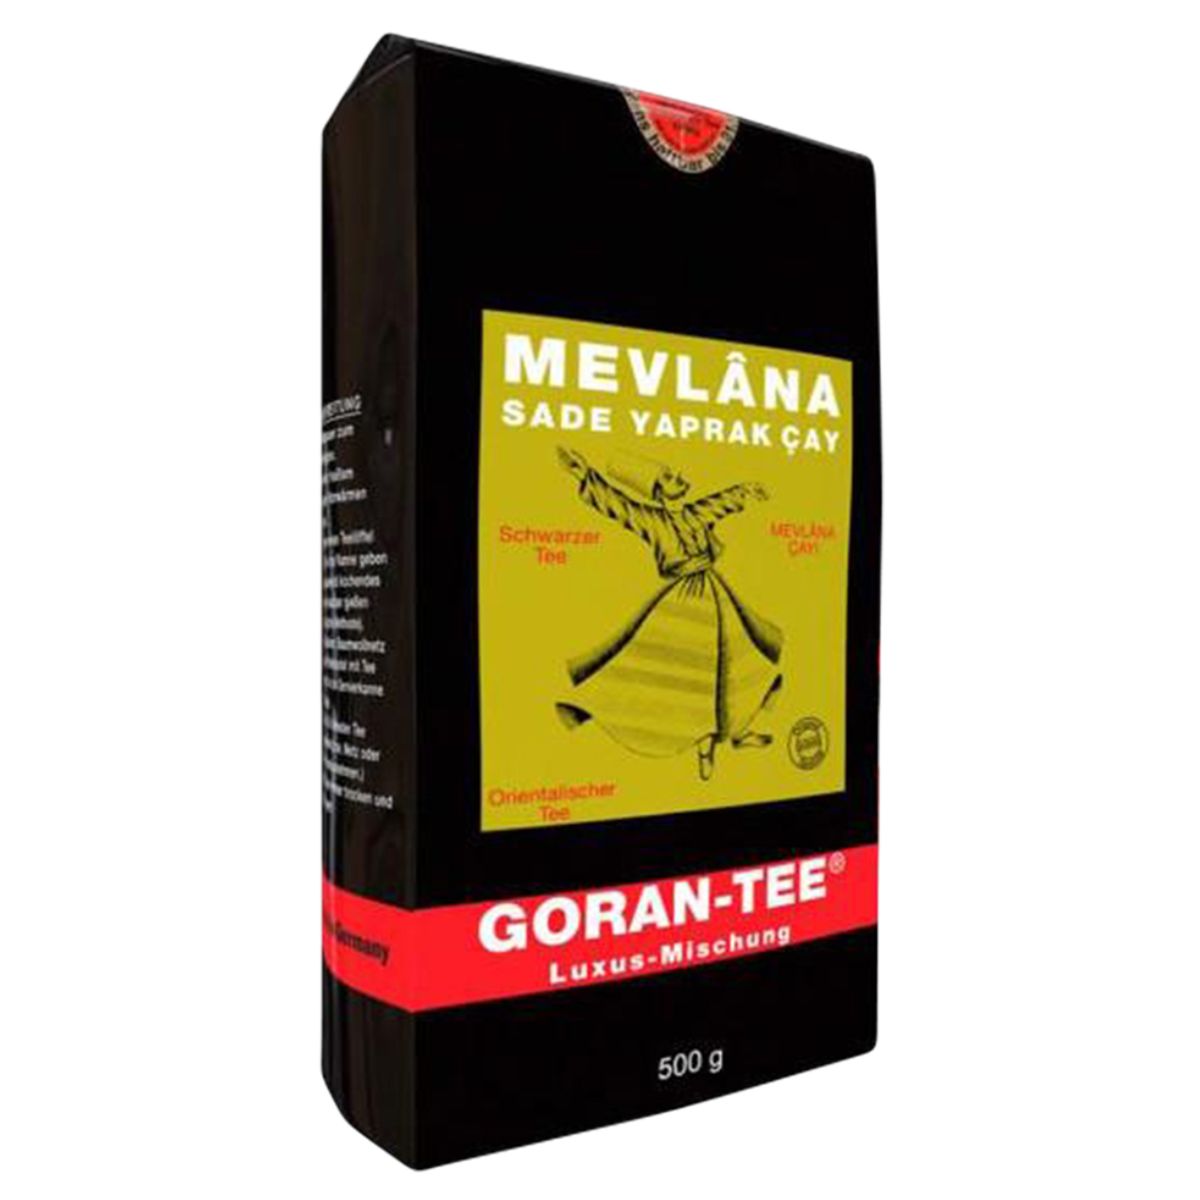 A bag of Mevlana - Goran Tea Ceylon Pure Leaf Tea - 500g.